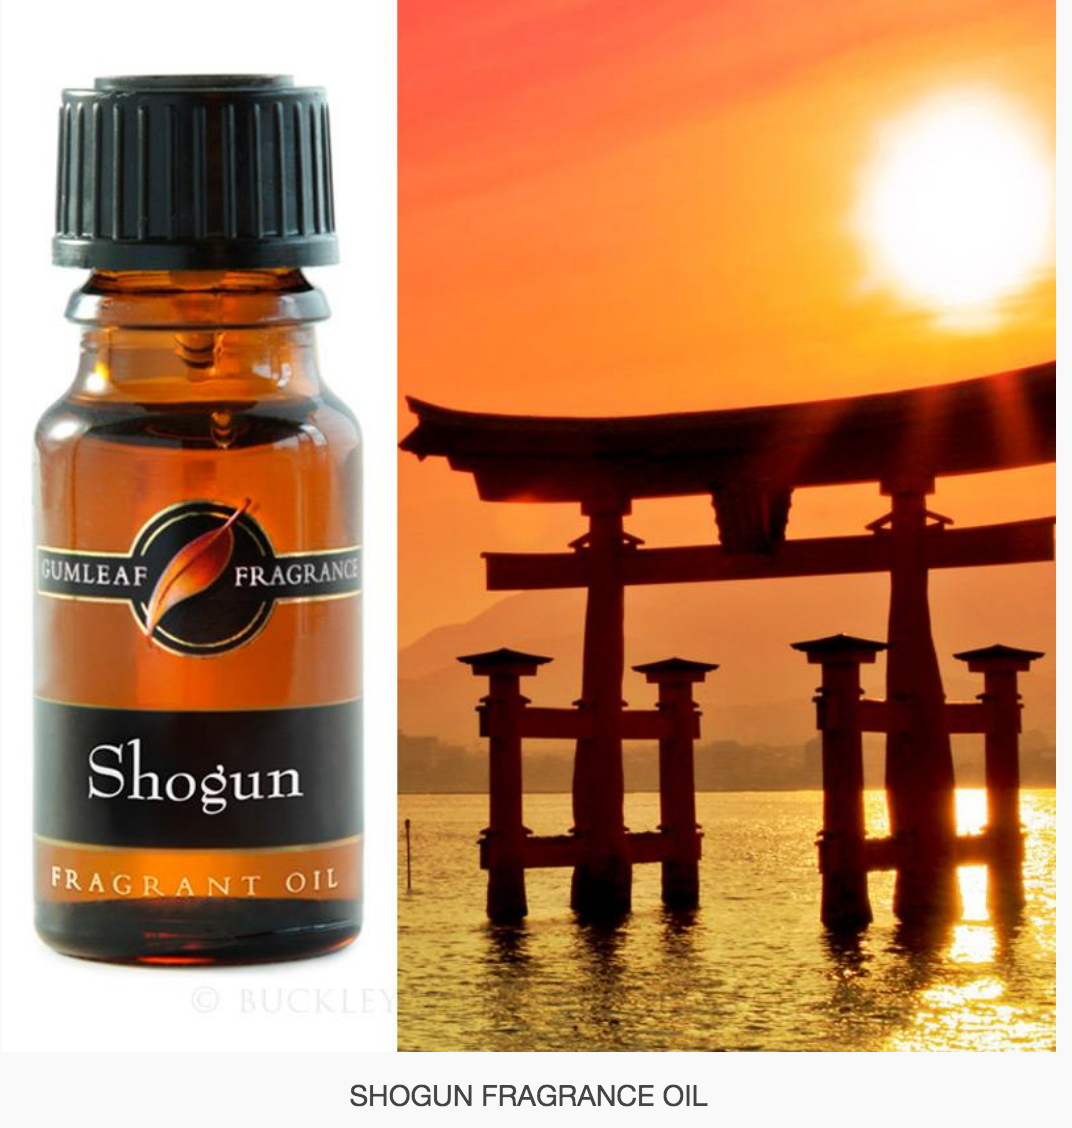 Shogun Fragrance Oil